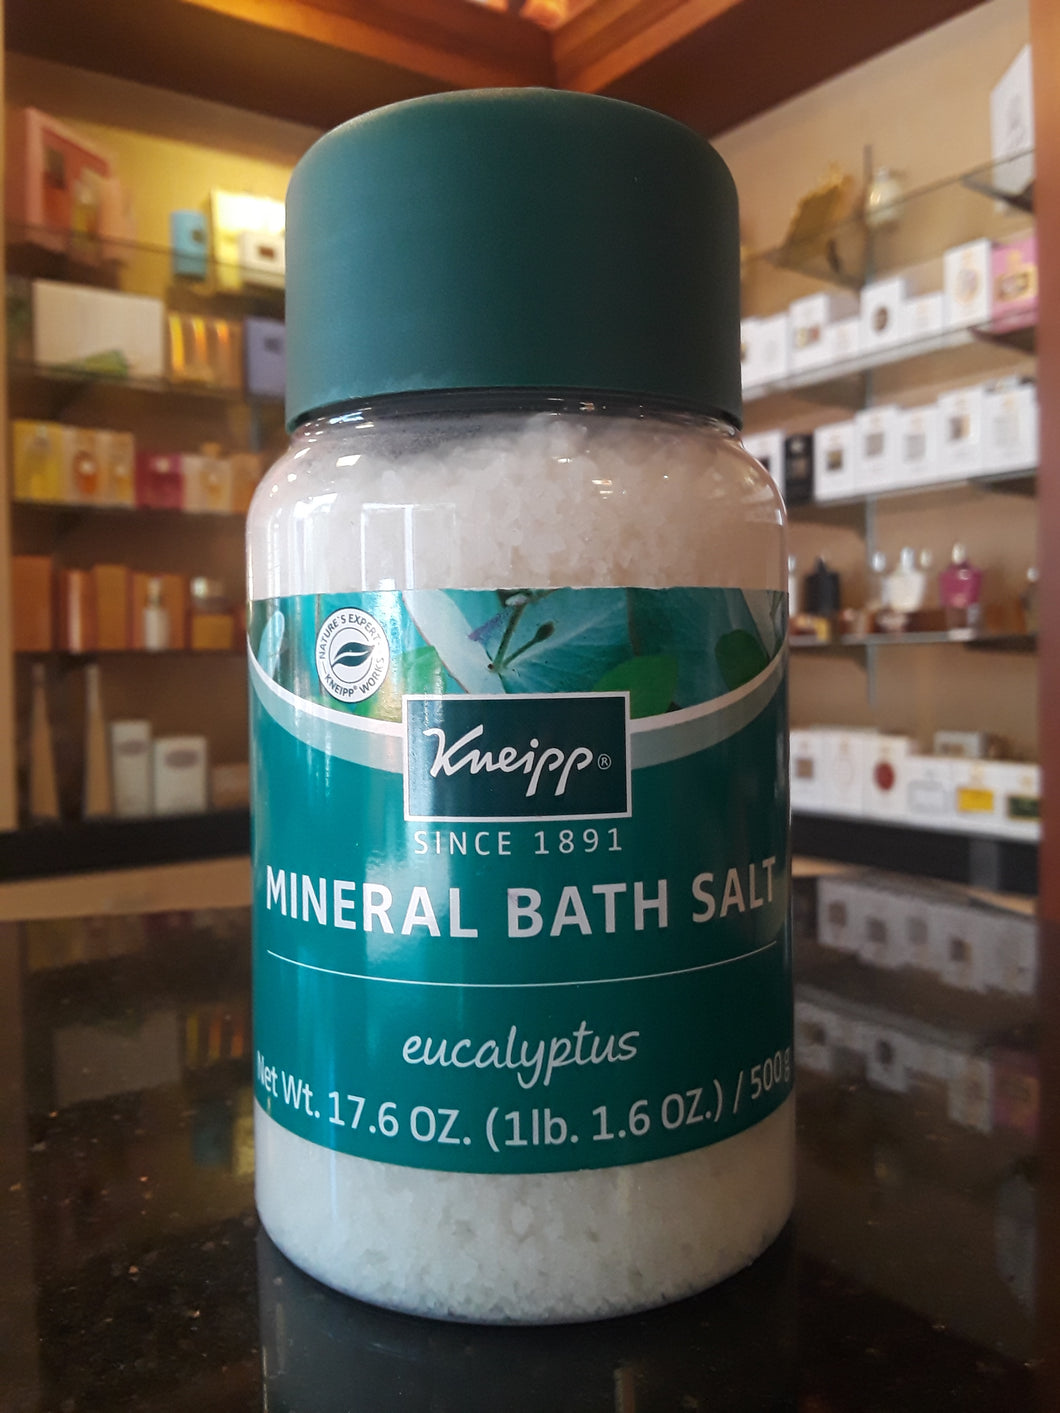 Eucalyptus bath salts